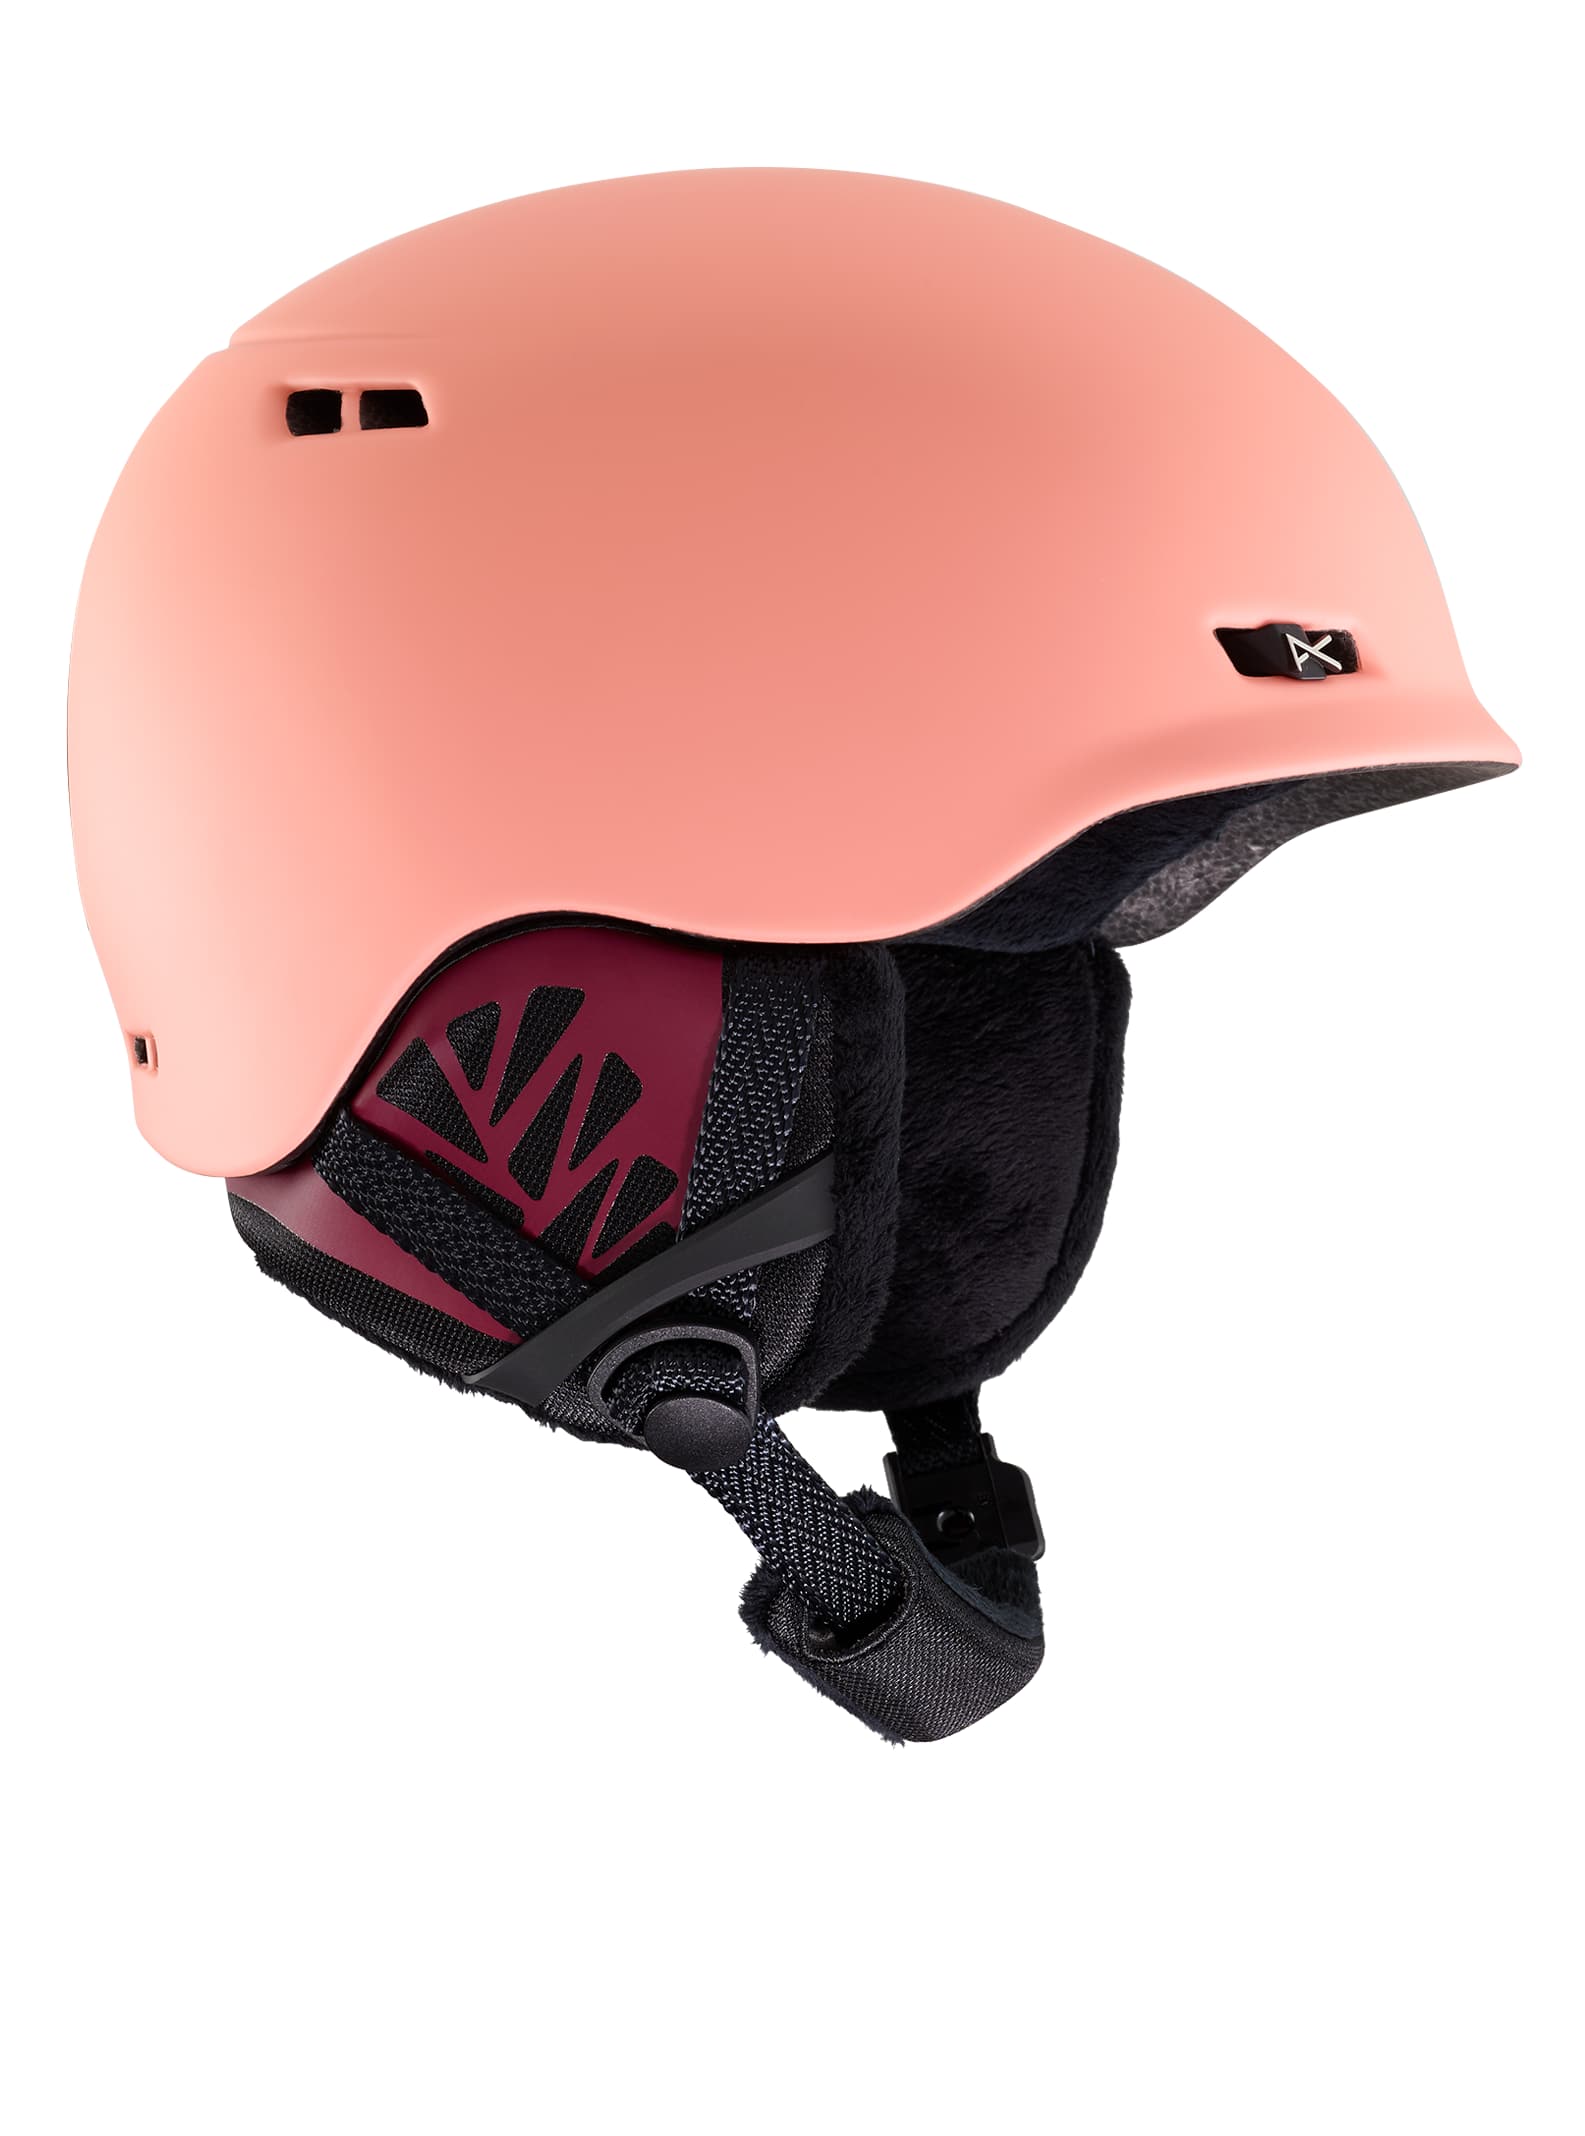 Women's Anon Griffon Helmet | Burton.com Winter 2020 PT